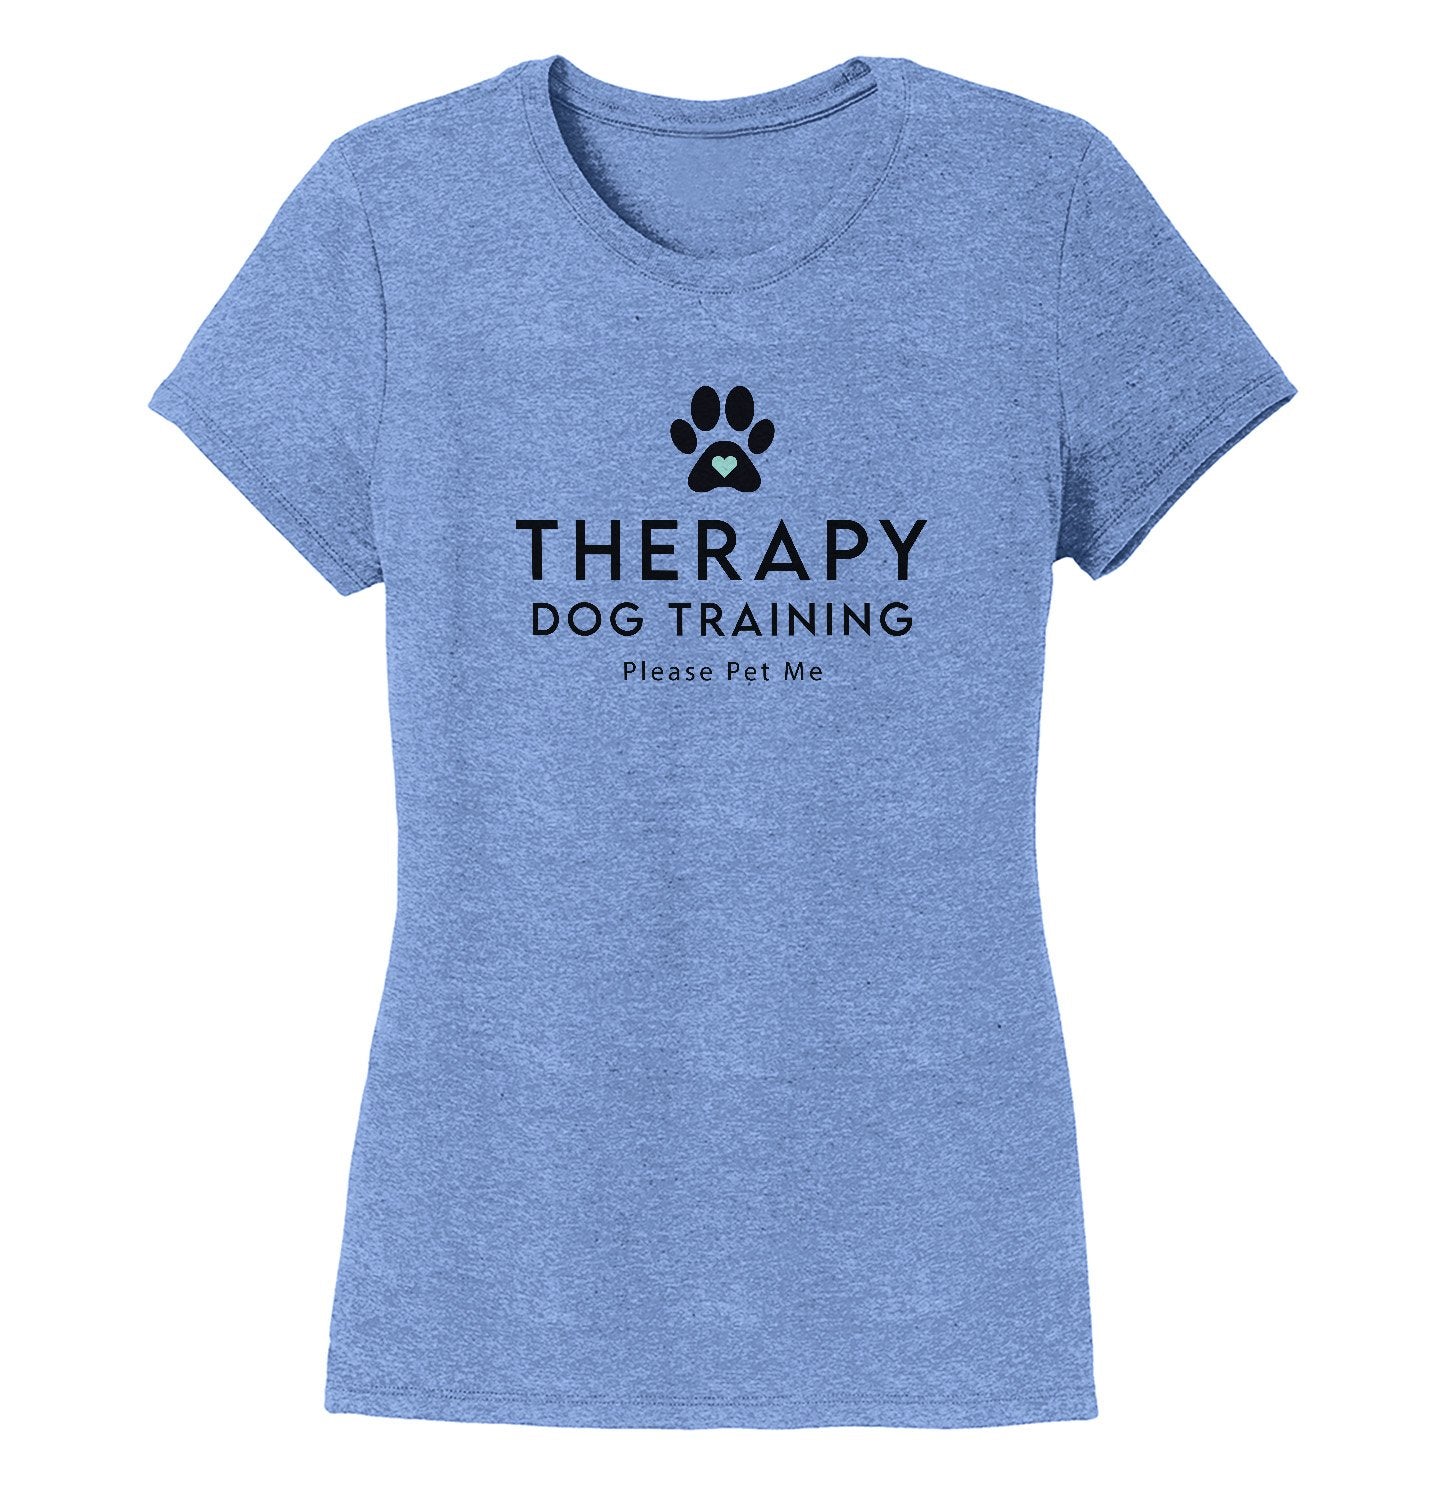 Therapy Dog Training - Women's Tri-Blend T-Shirt